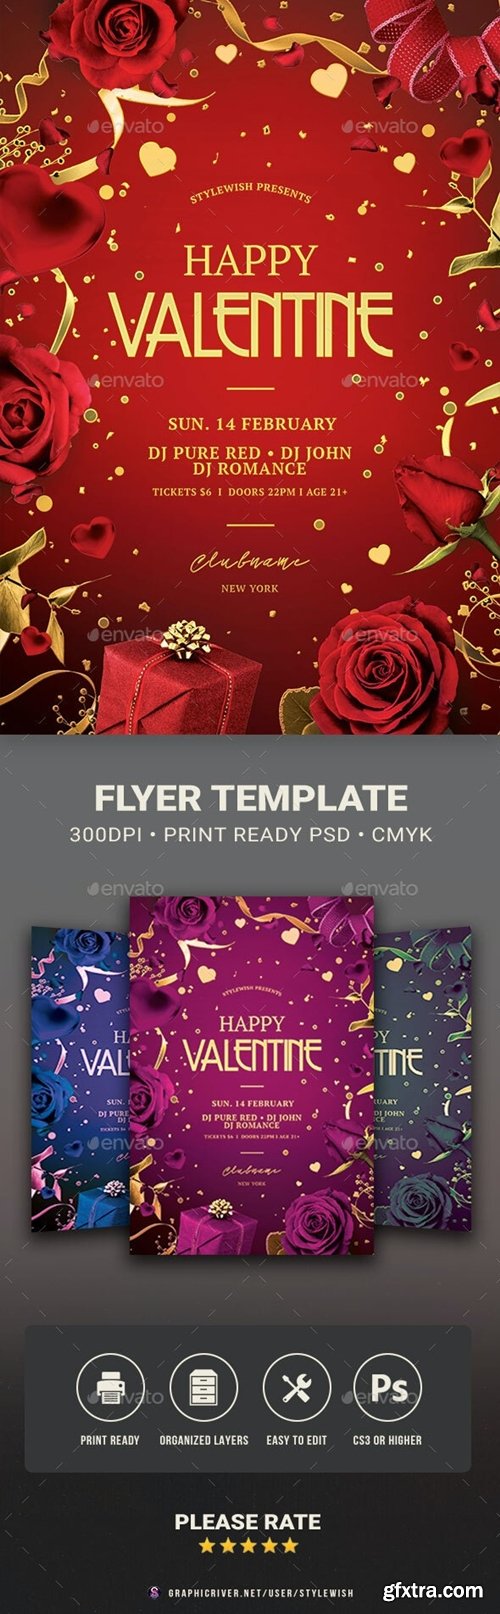 GraphicRiver - Valentine Flyer 29975906